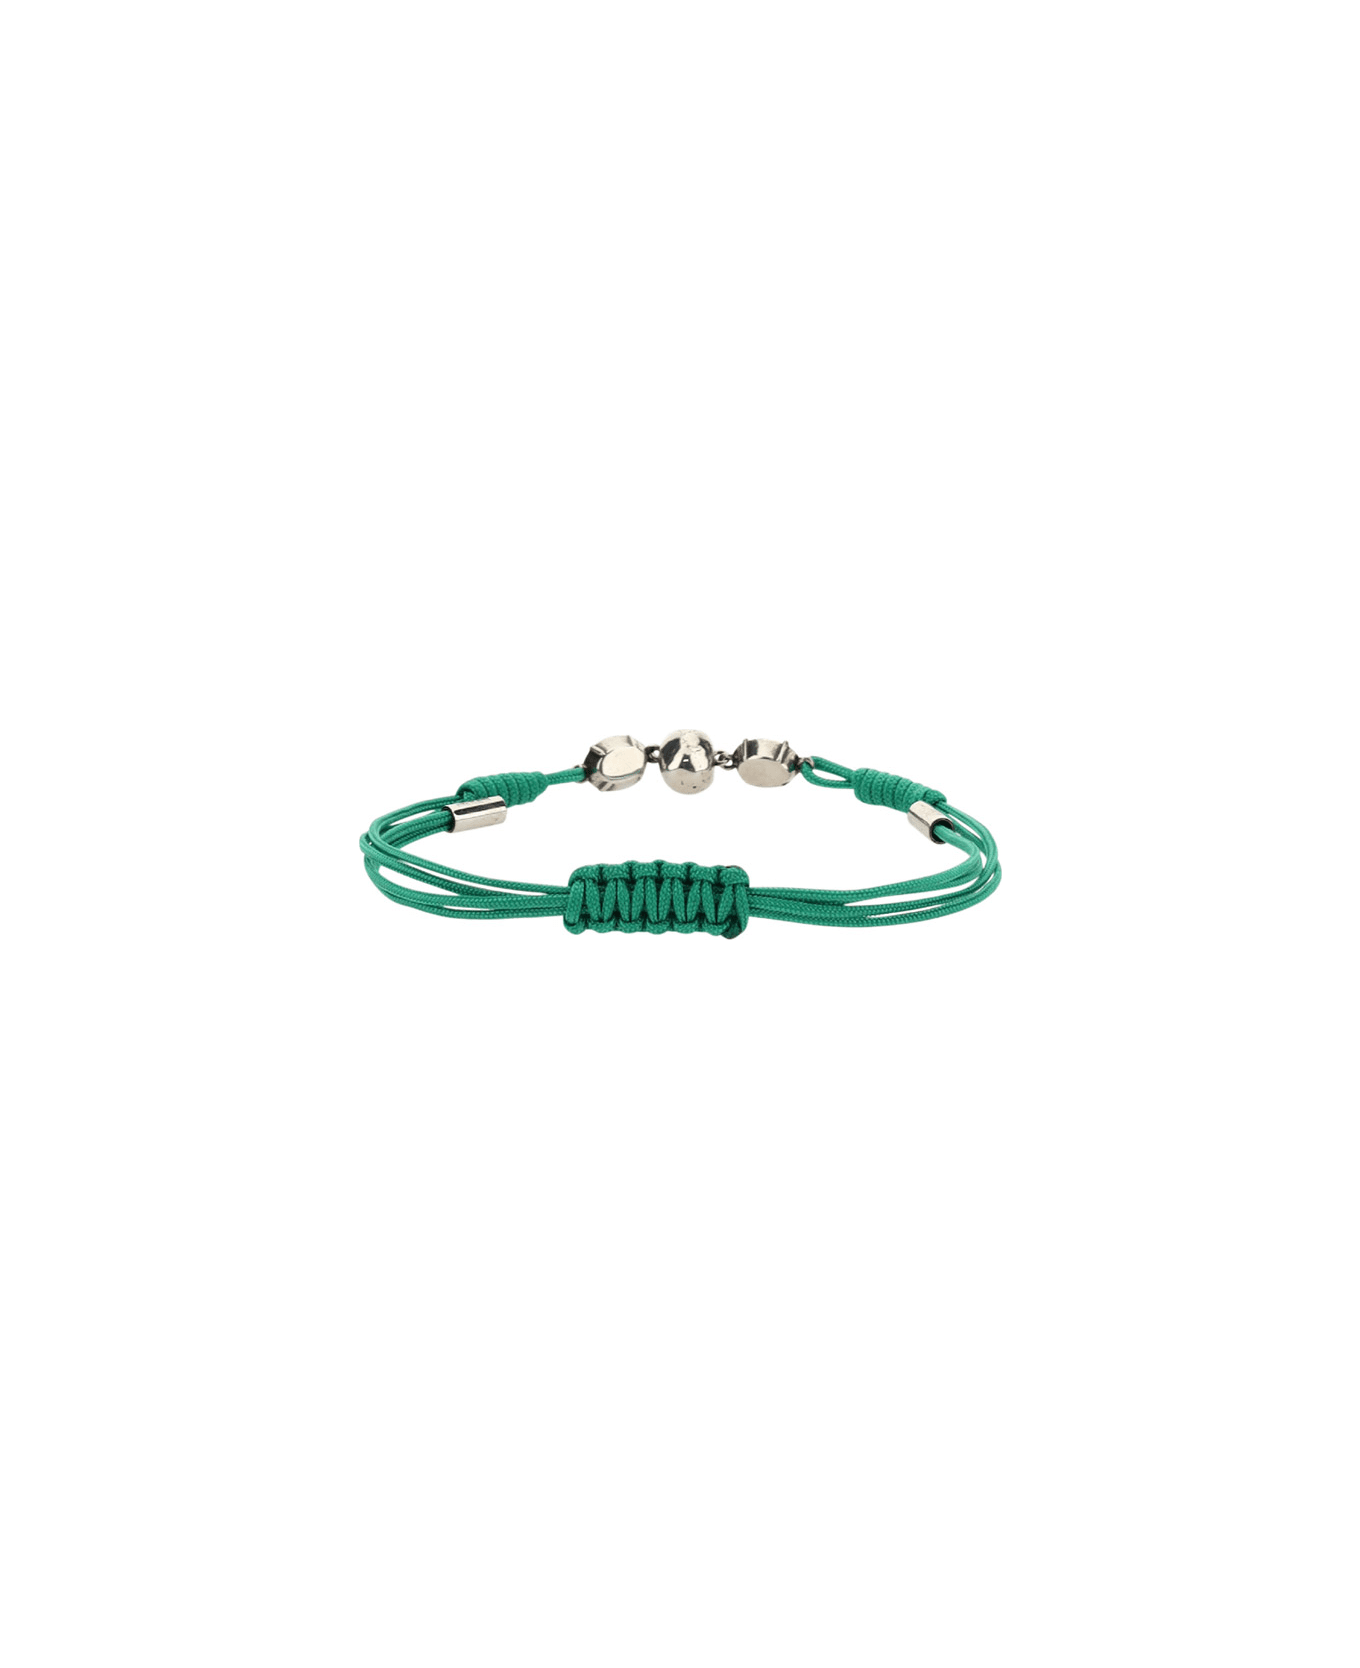 Alexander McQueen Skull Friendship Bracelet - Emerald